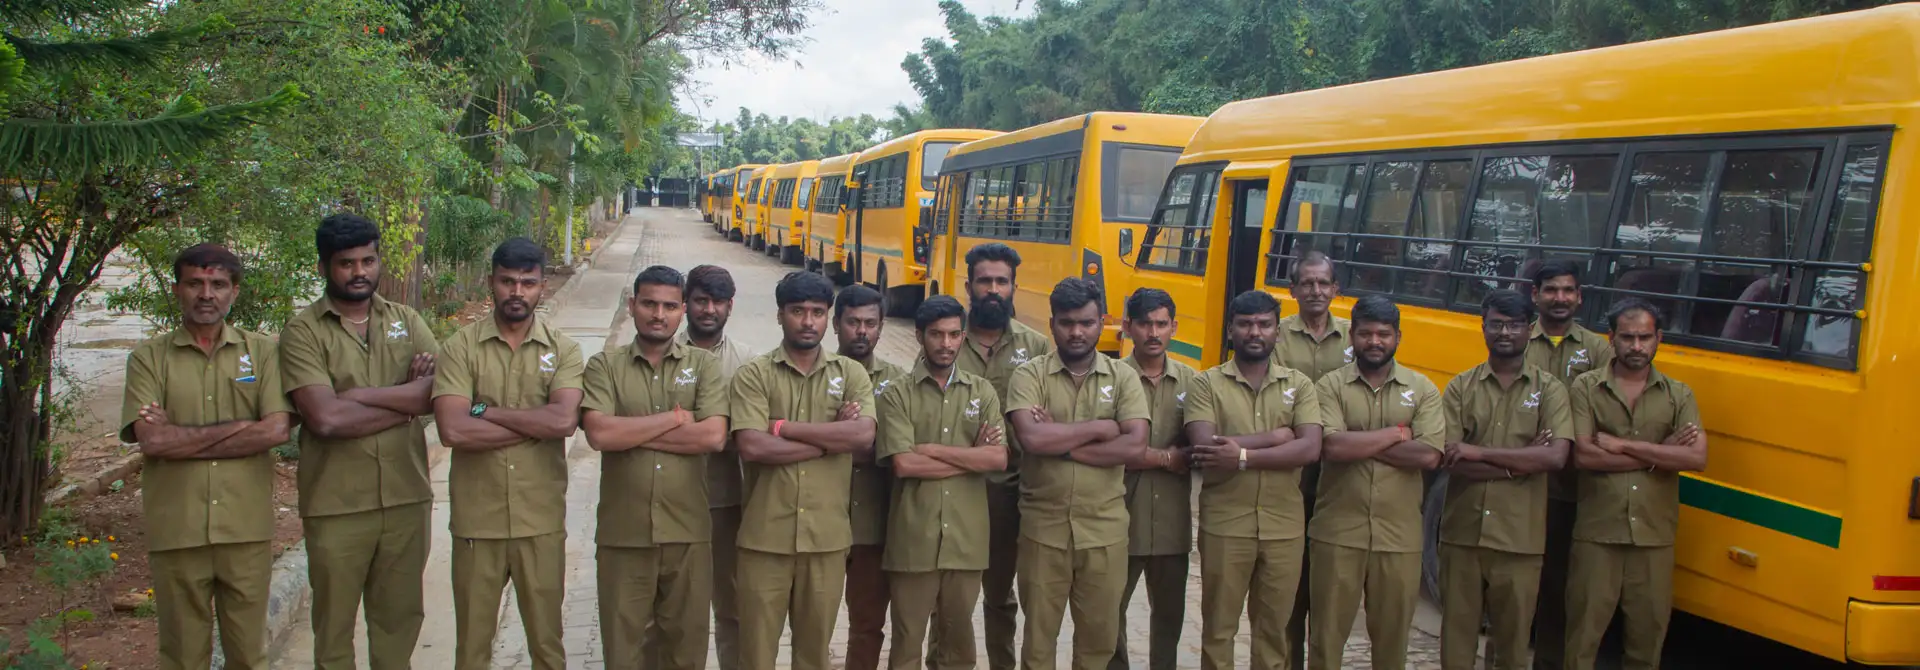 Presidency School Banashankari - School Transport Drivers